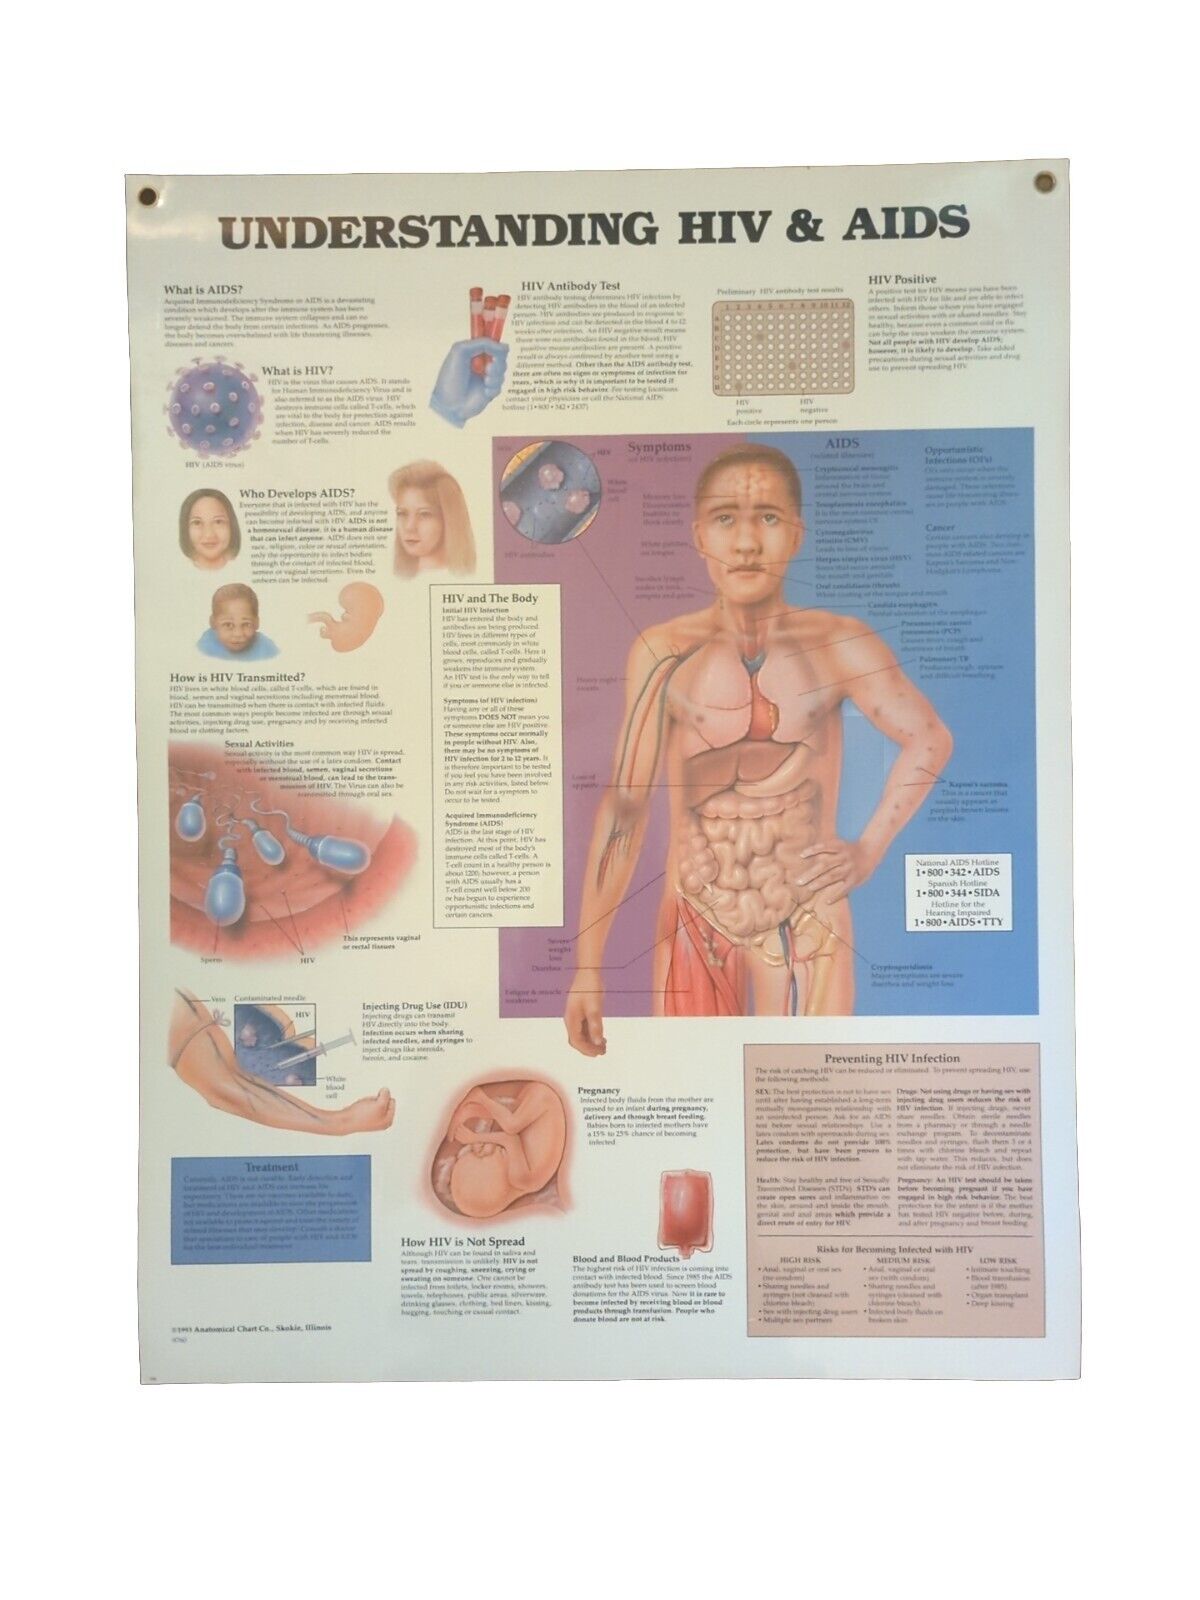 Vintage 1993 Anatomical Chart CO. “Understanding HIV & AIDS” 26x20 